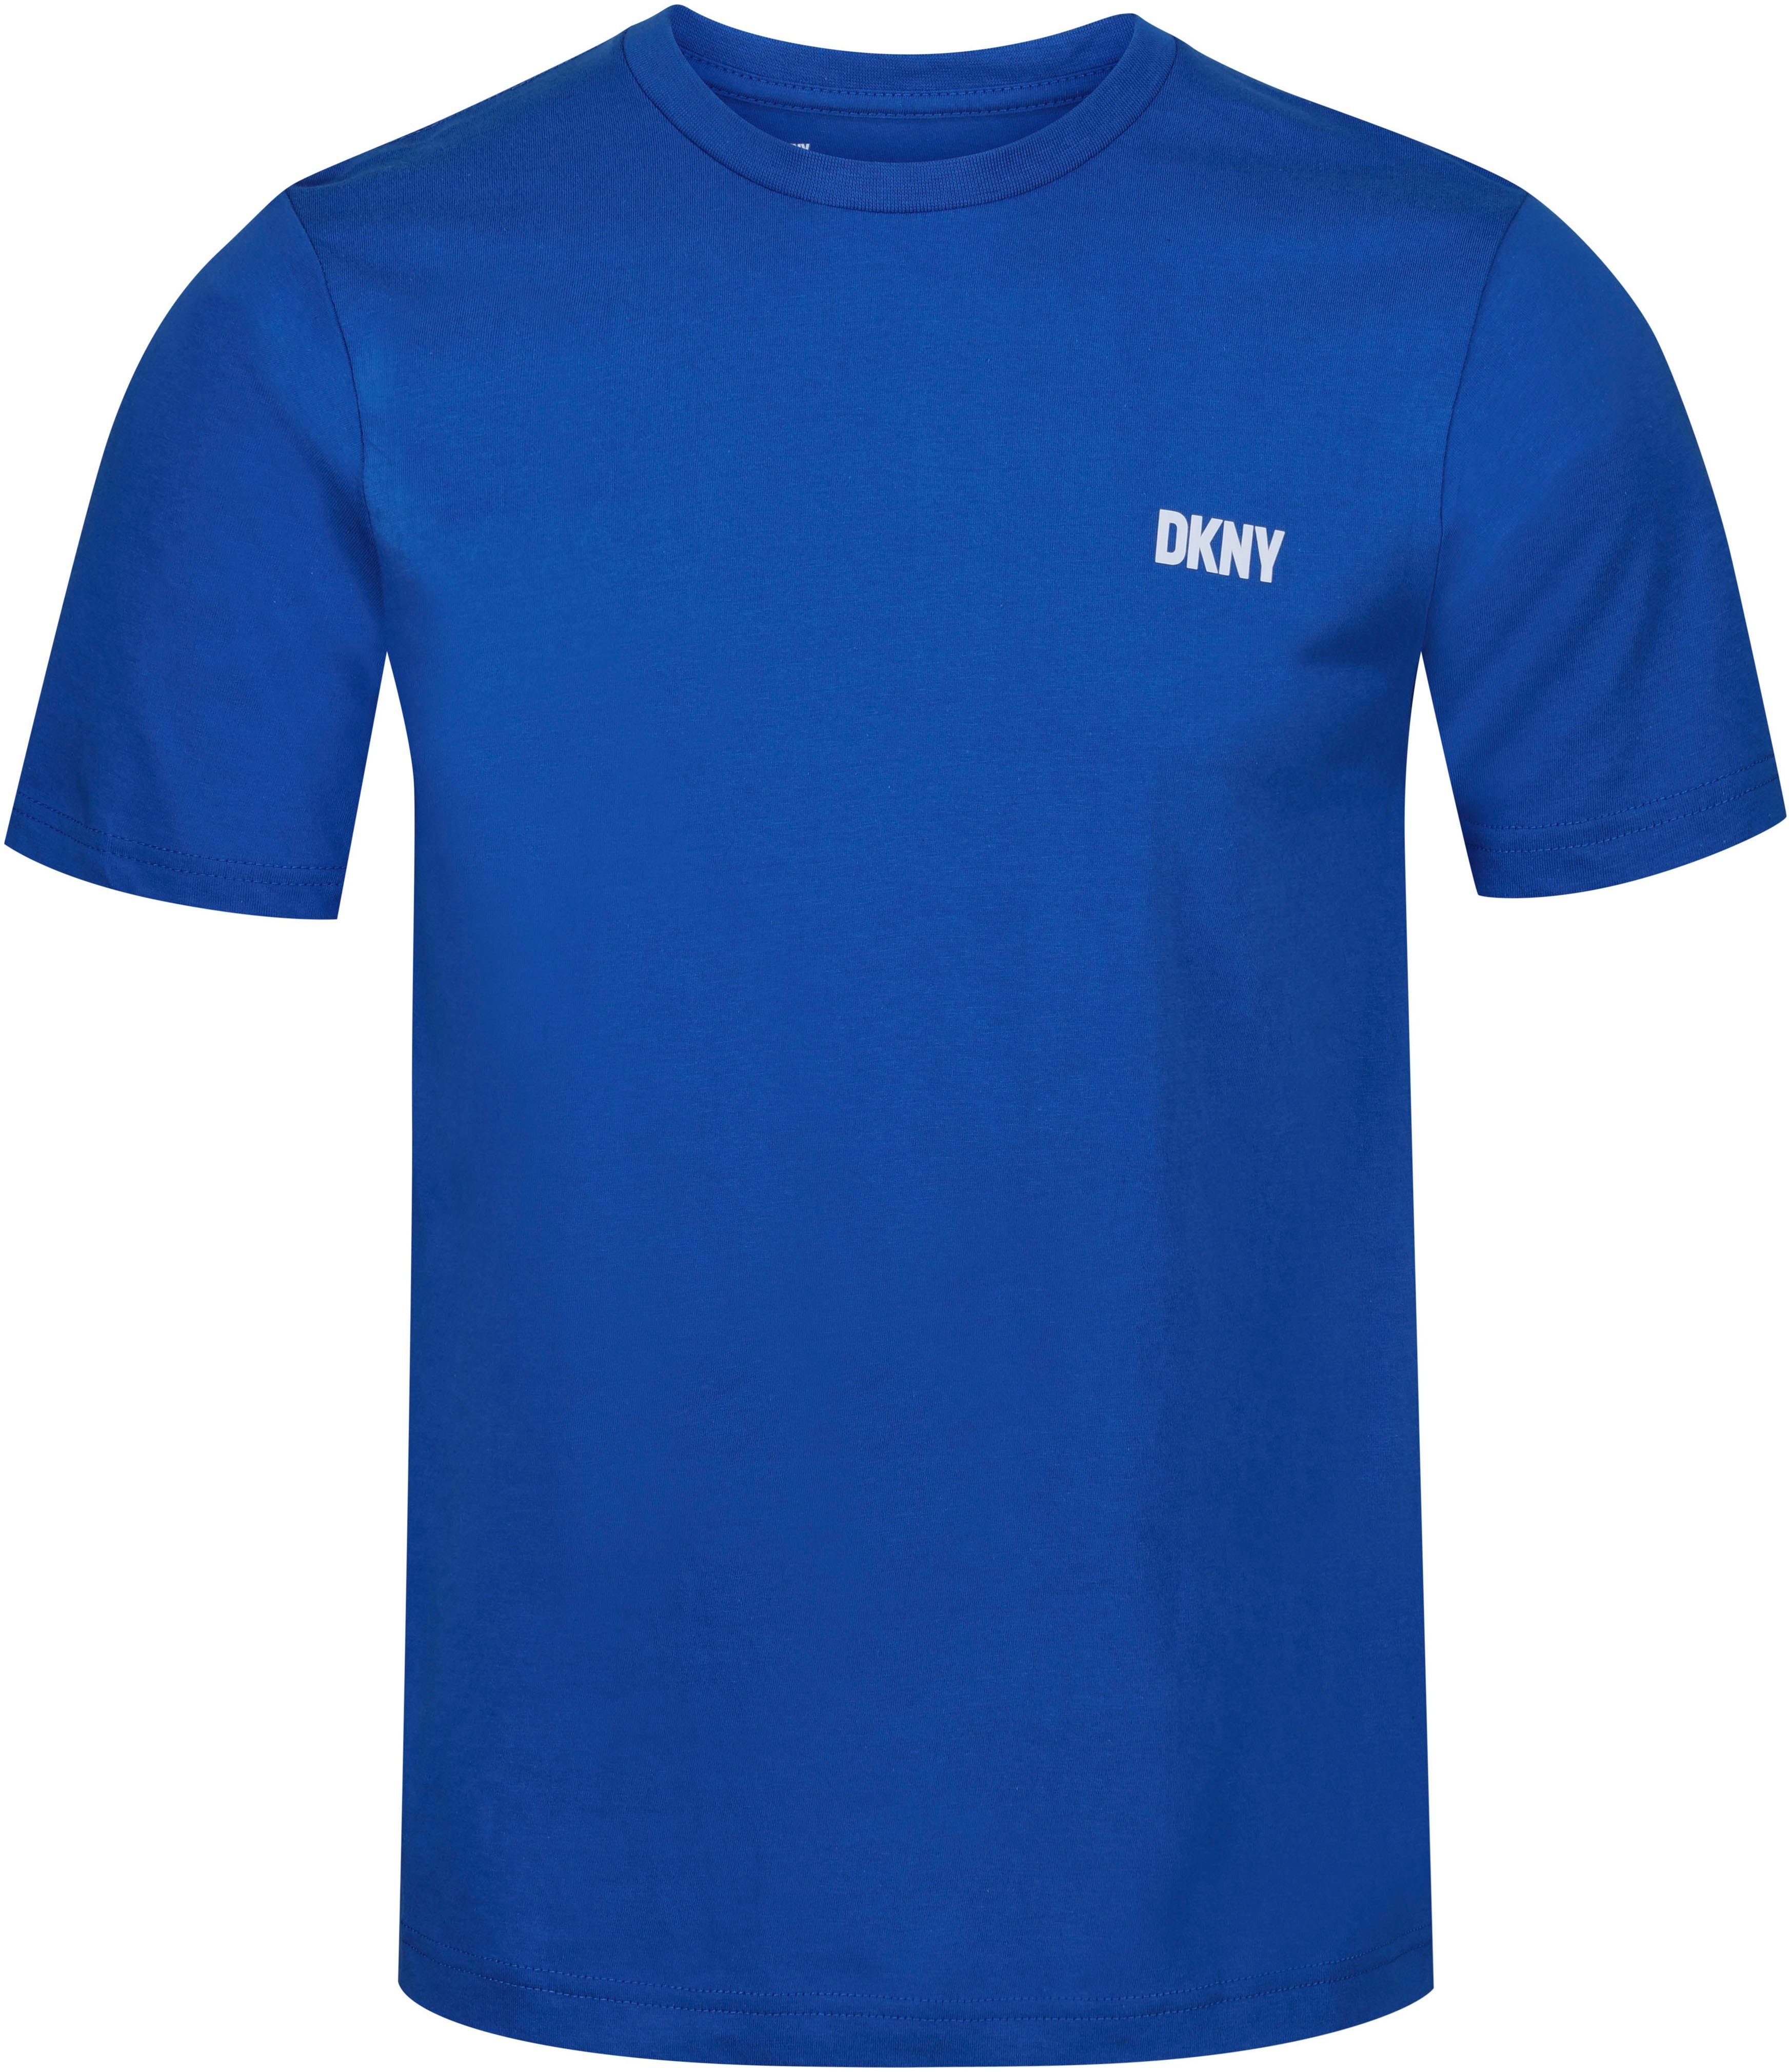 navy/white/b DKNY T-Shirt GIANTS